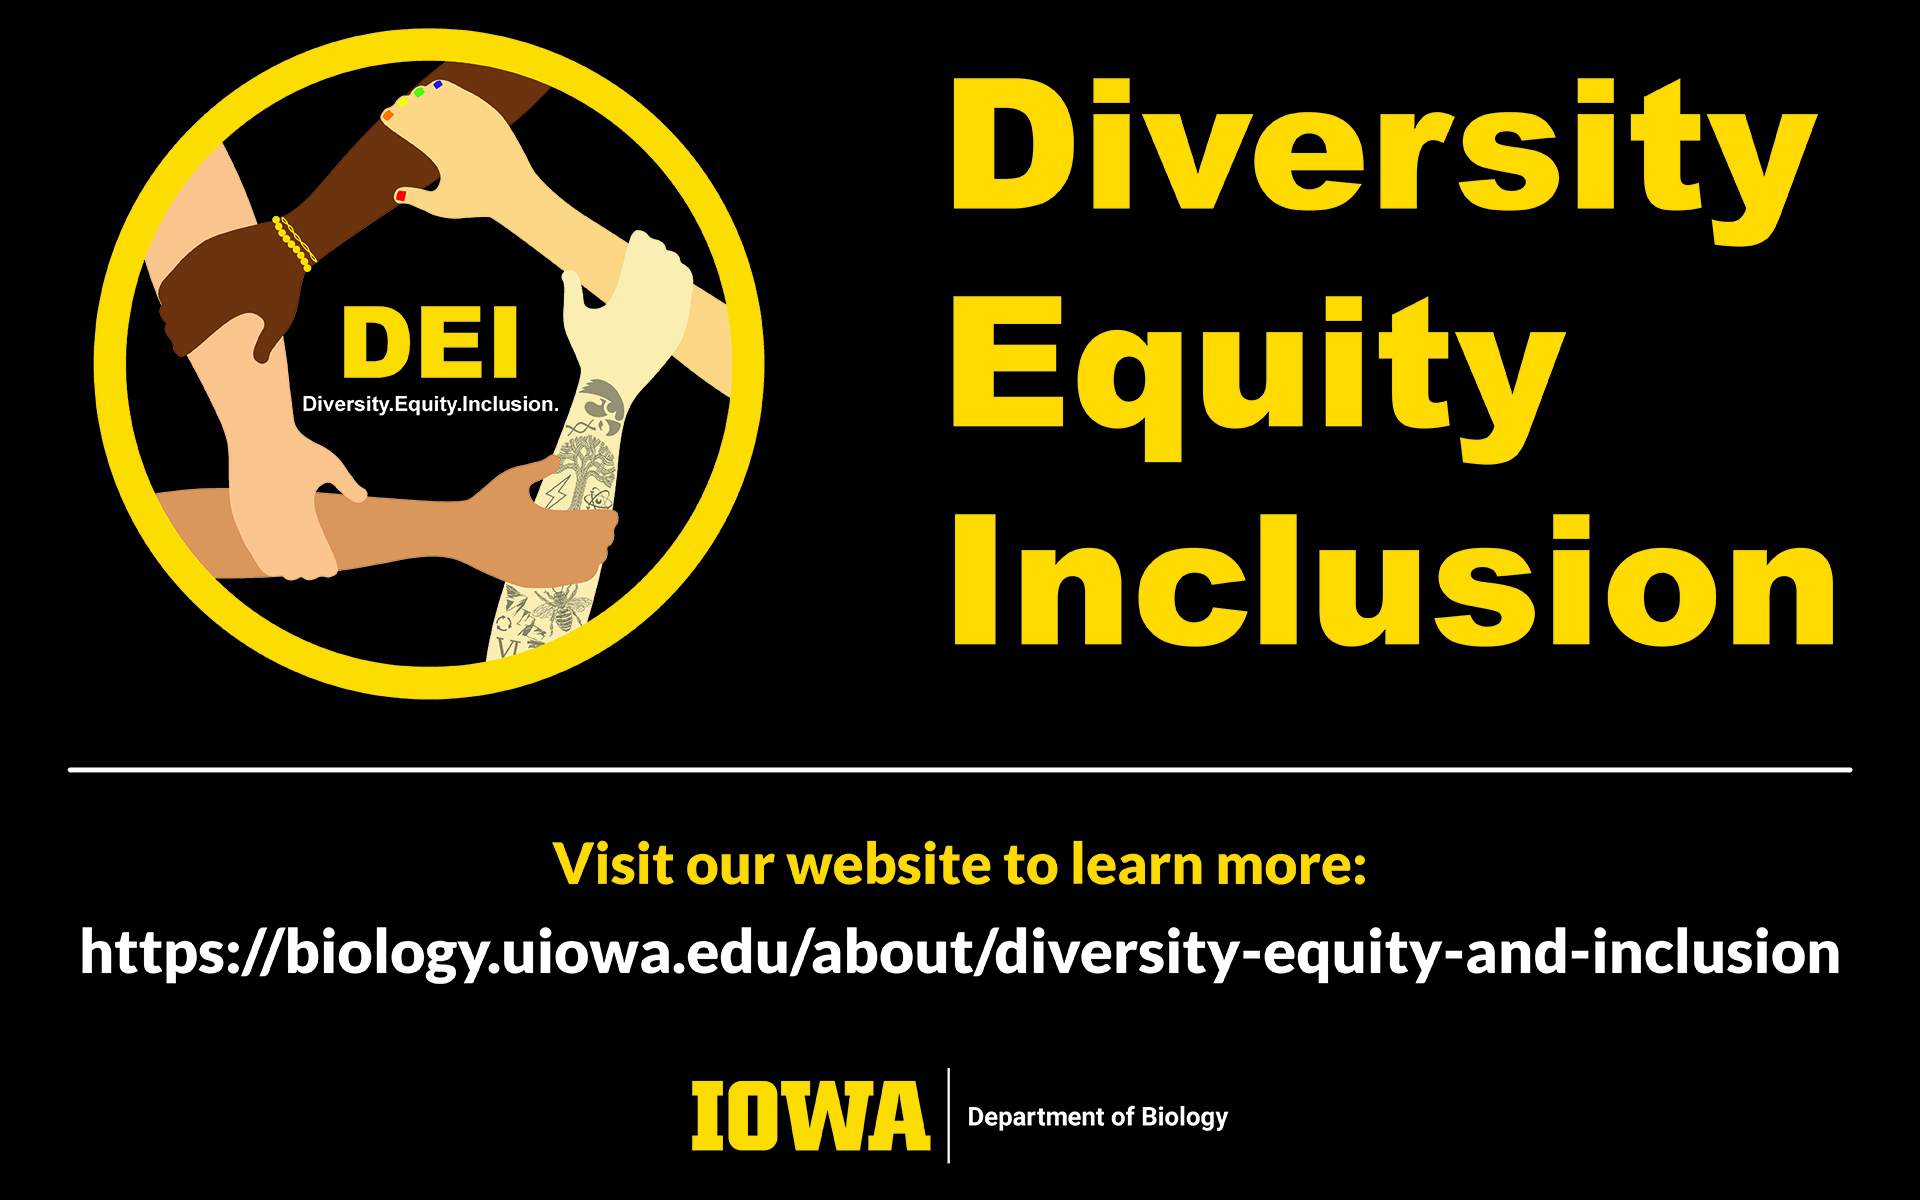 Diversity Equity Inclusion (DEI)